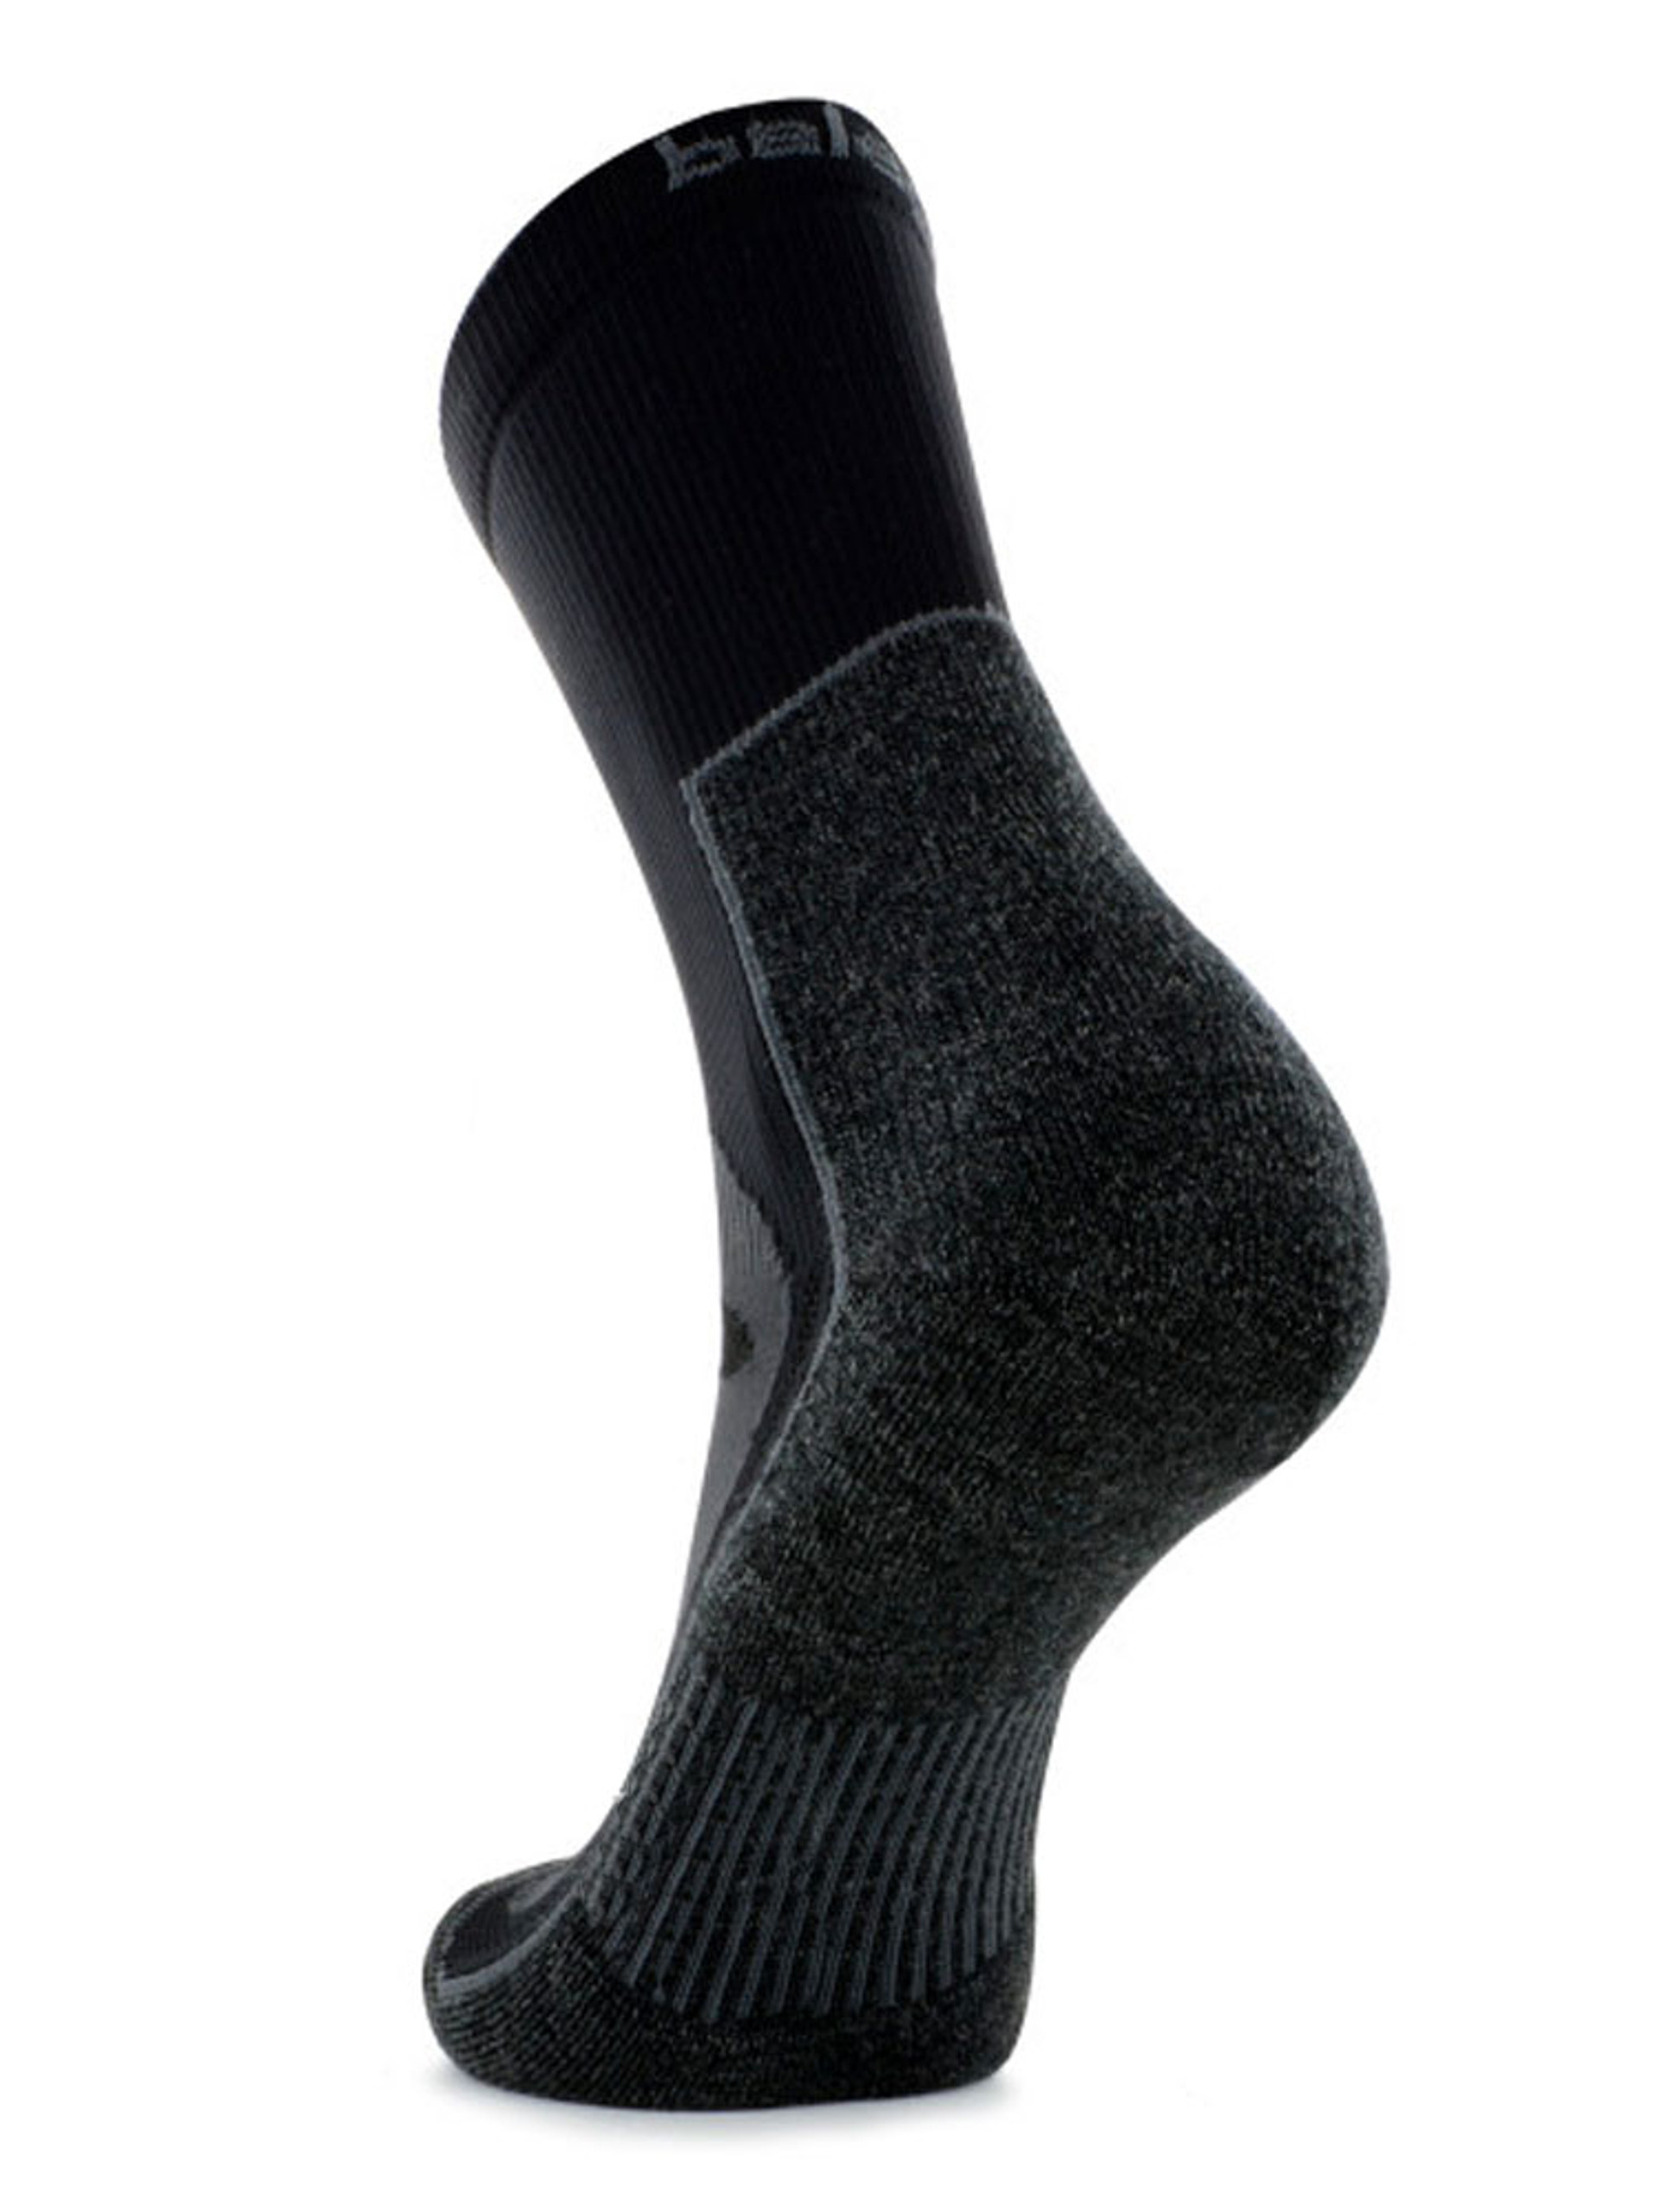 Balega Blister Resistant Crew Socks - Grey/Black | GolfBox